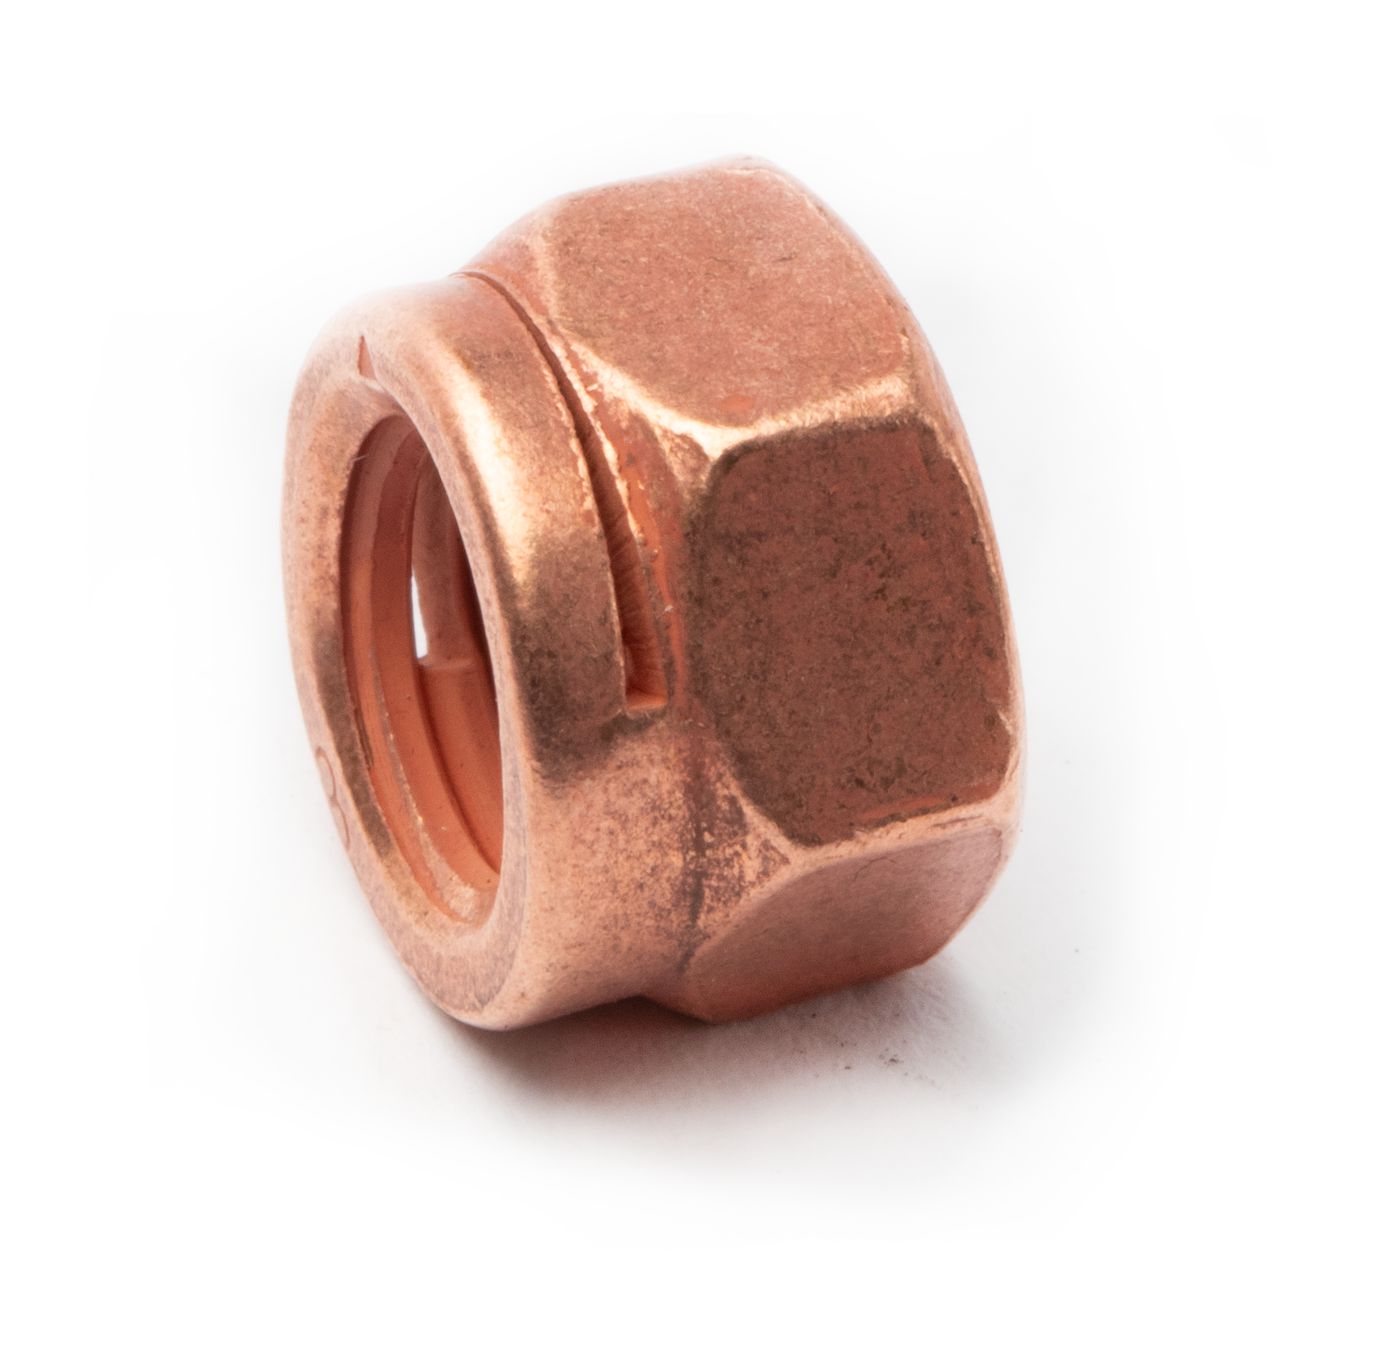 Kupfermutter
Copper nut
Ecrou en cuivre
Tuerca de cobre
Dado di 